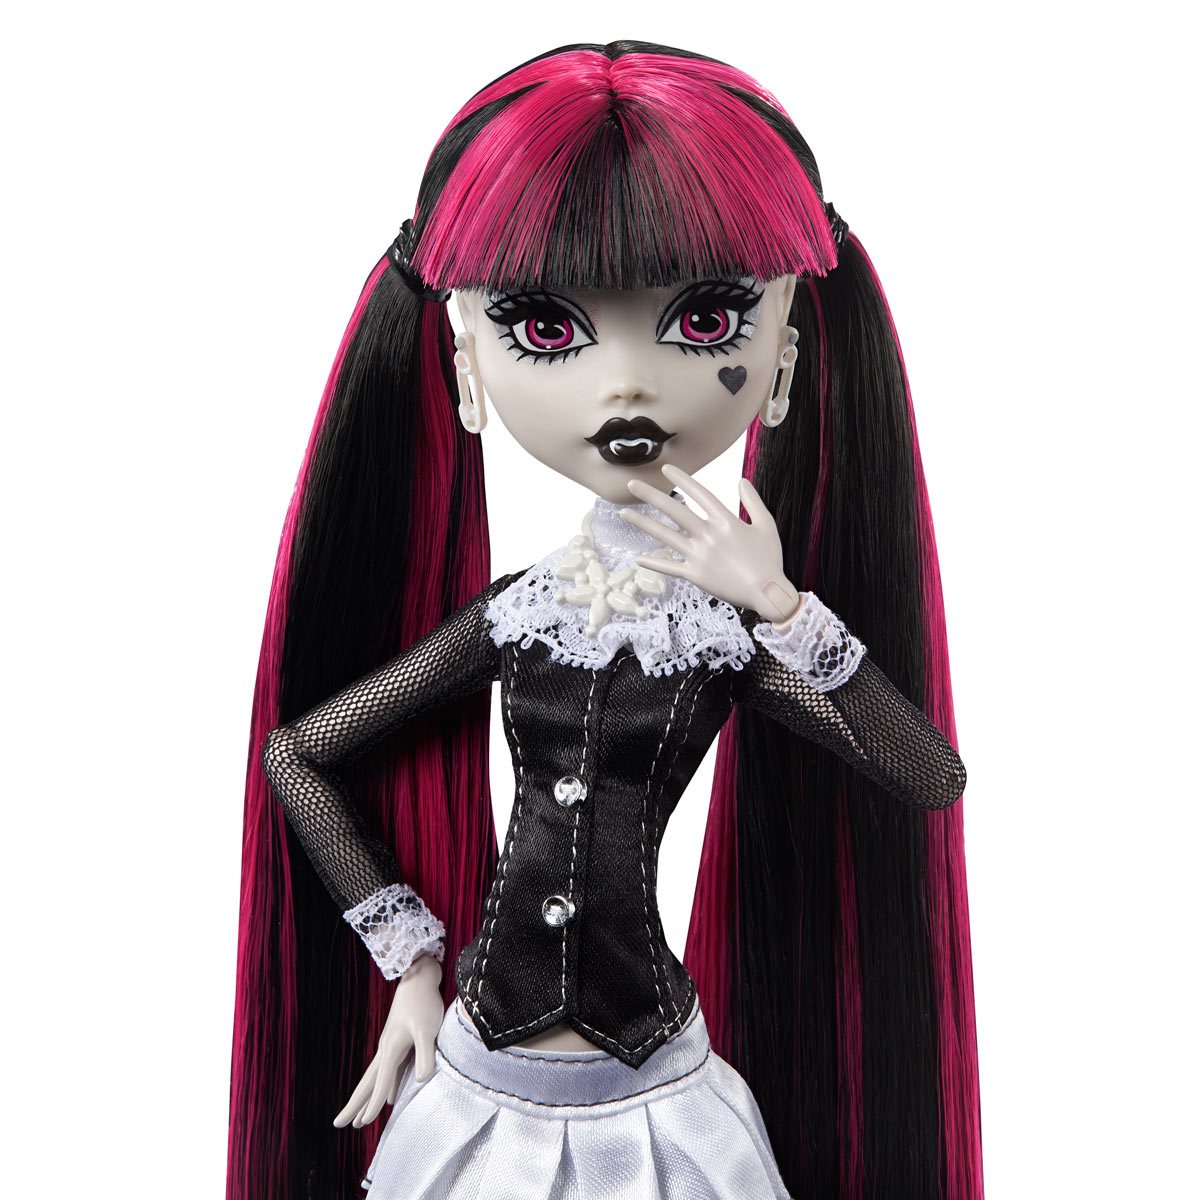 Monster High Reel Drama Draculaura Doll - Entertainment Earth